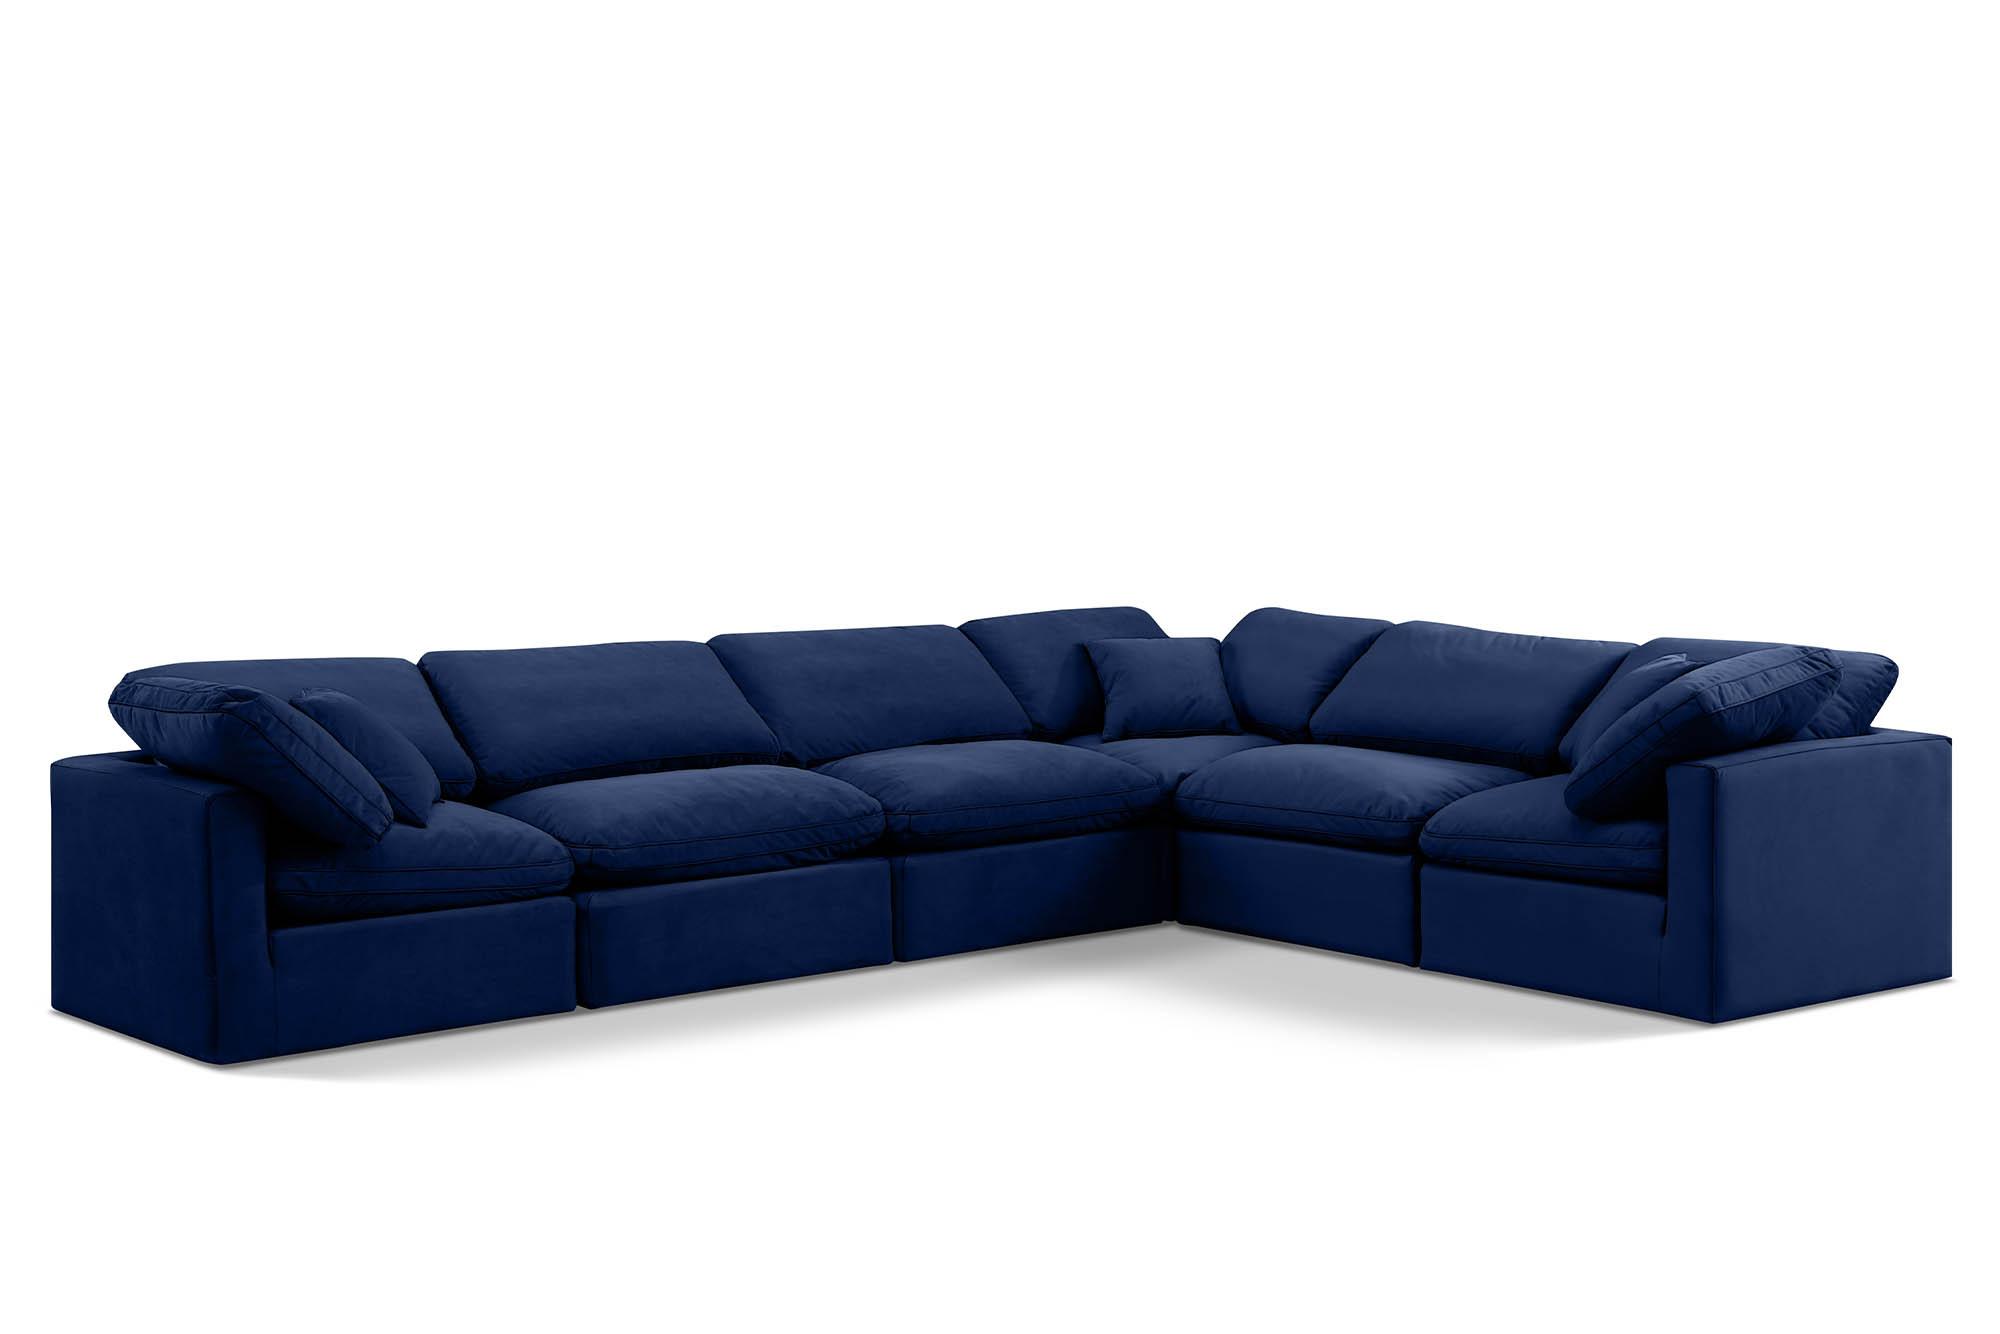 Contemporary, Modern Modular Sectional Sofa INDULGE 147Navy-Sec6A 147Navy-Sec6A in Navy Velvet